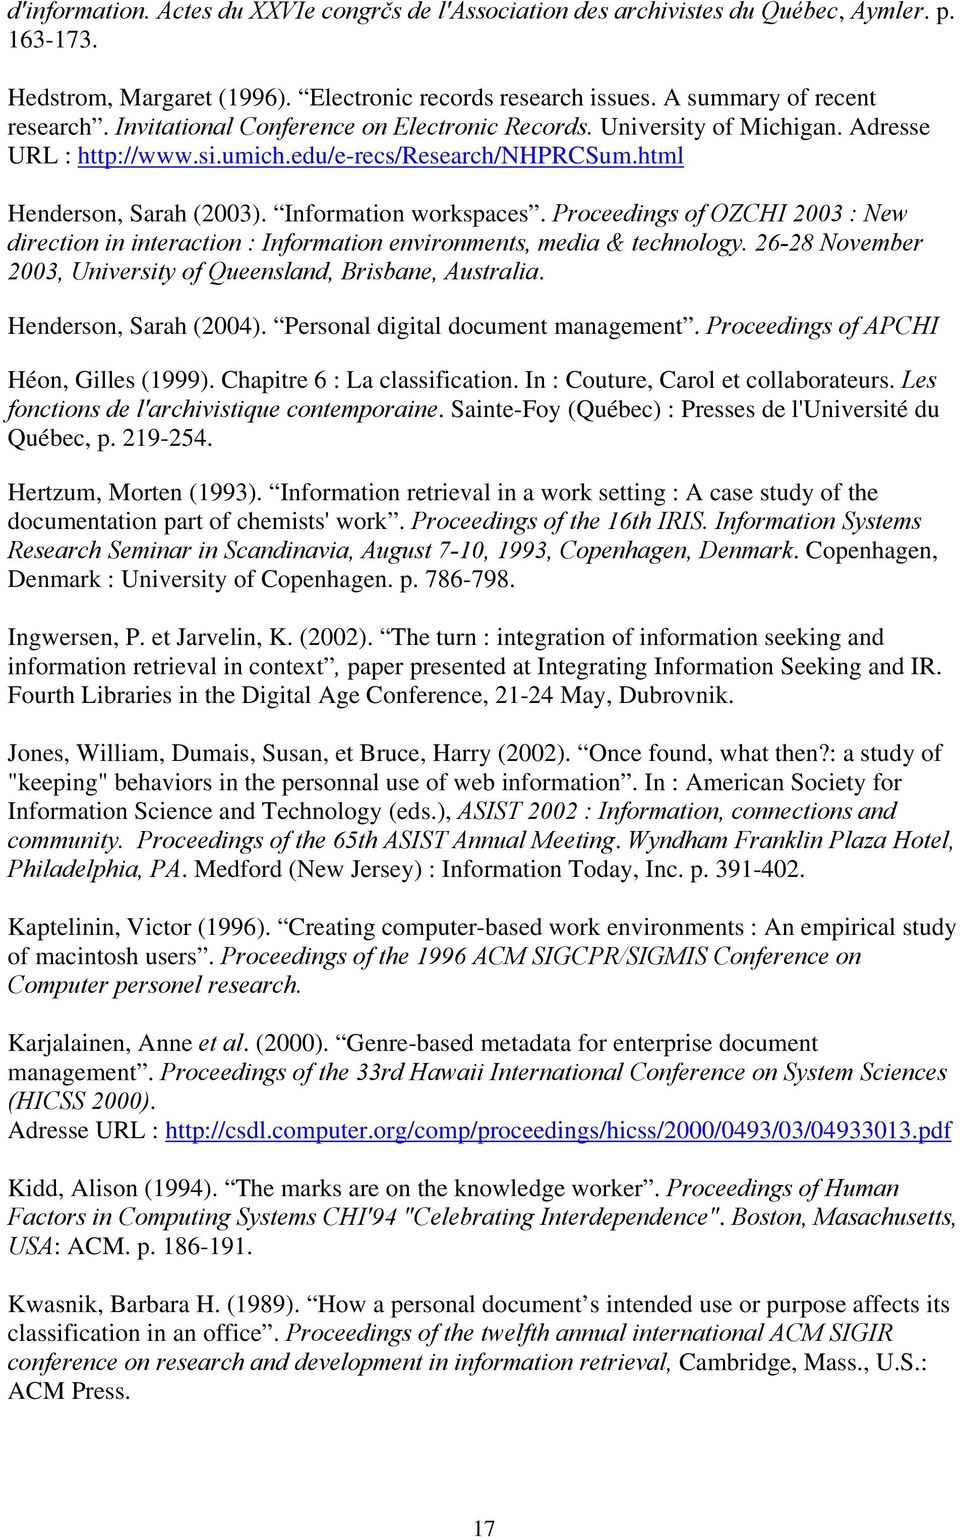 Proceedings of OZCHI 2003 : New direction in interaction : Information environments, media & technology. 26-28 November 2003, University of Queensland, Brisbane, Australia. Henderson, Sarah (2004).